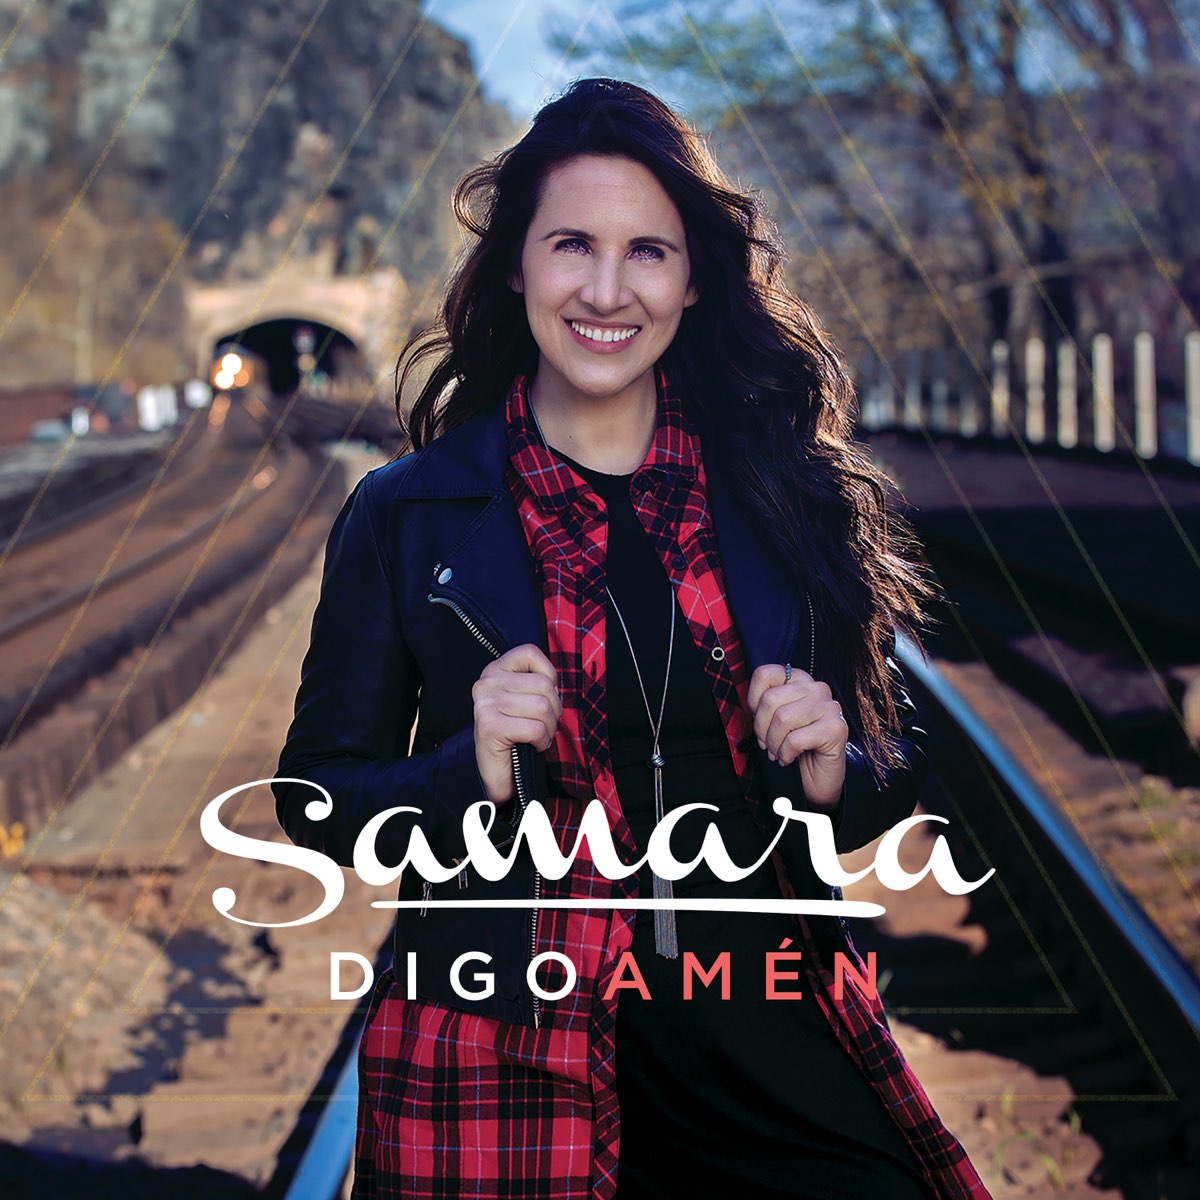 Digo Amen - Single par Samara sur Apple Music